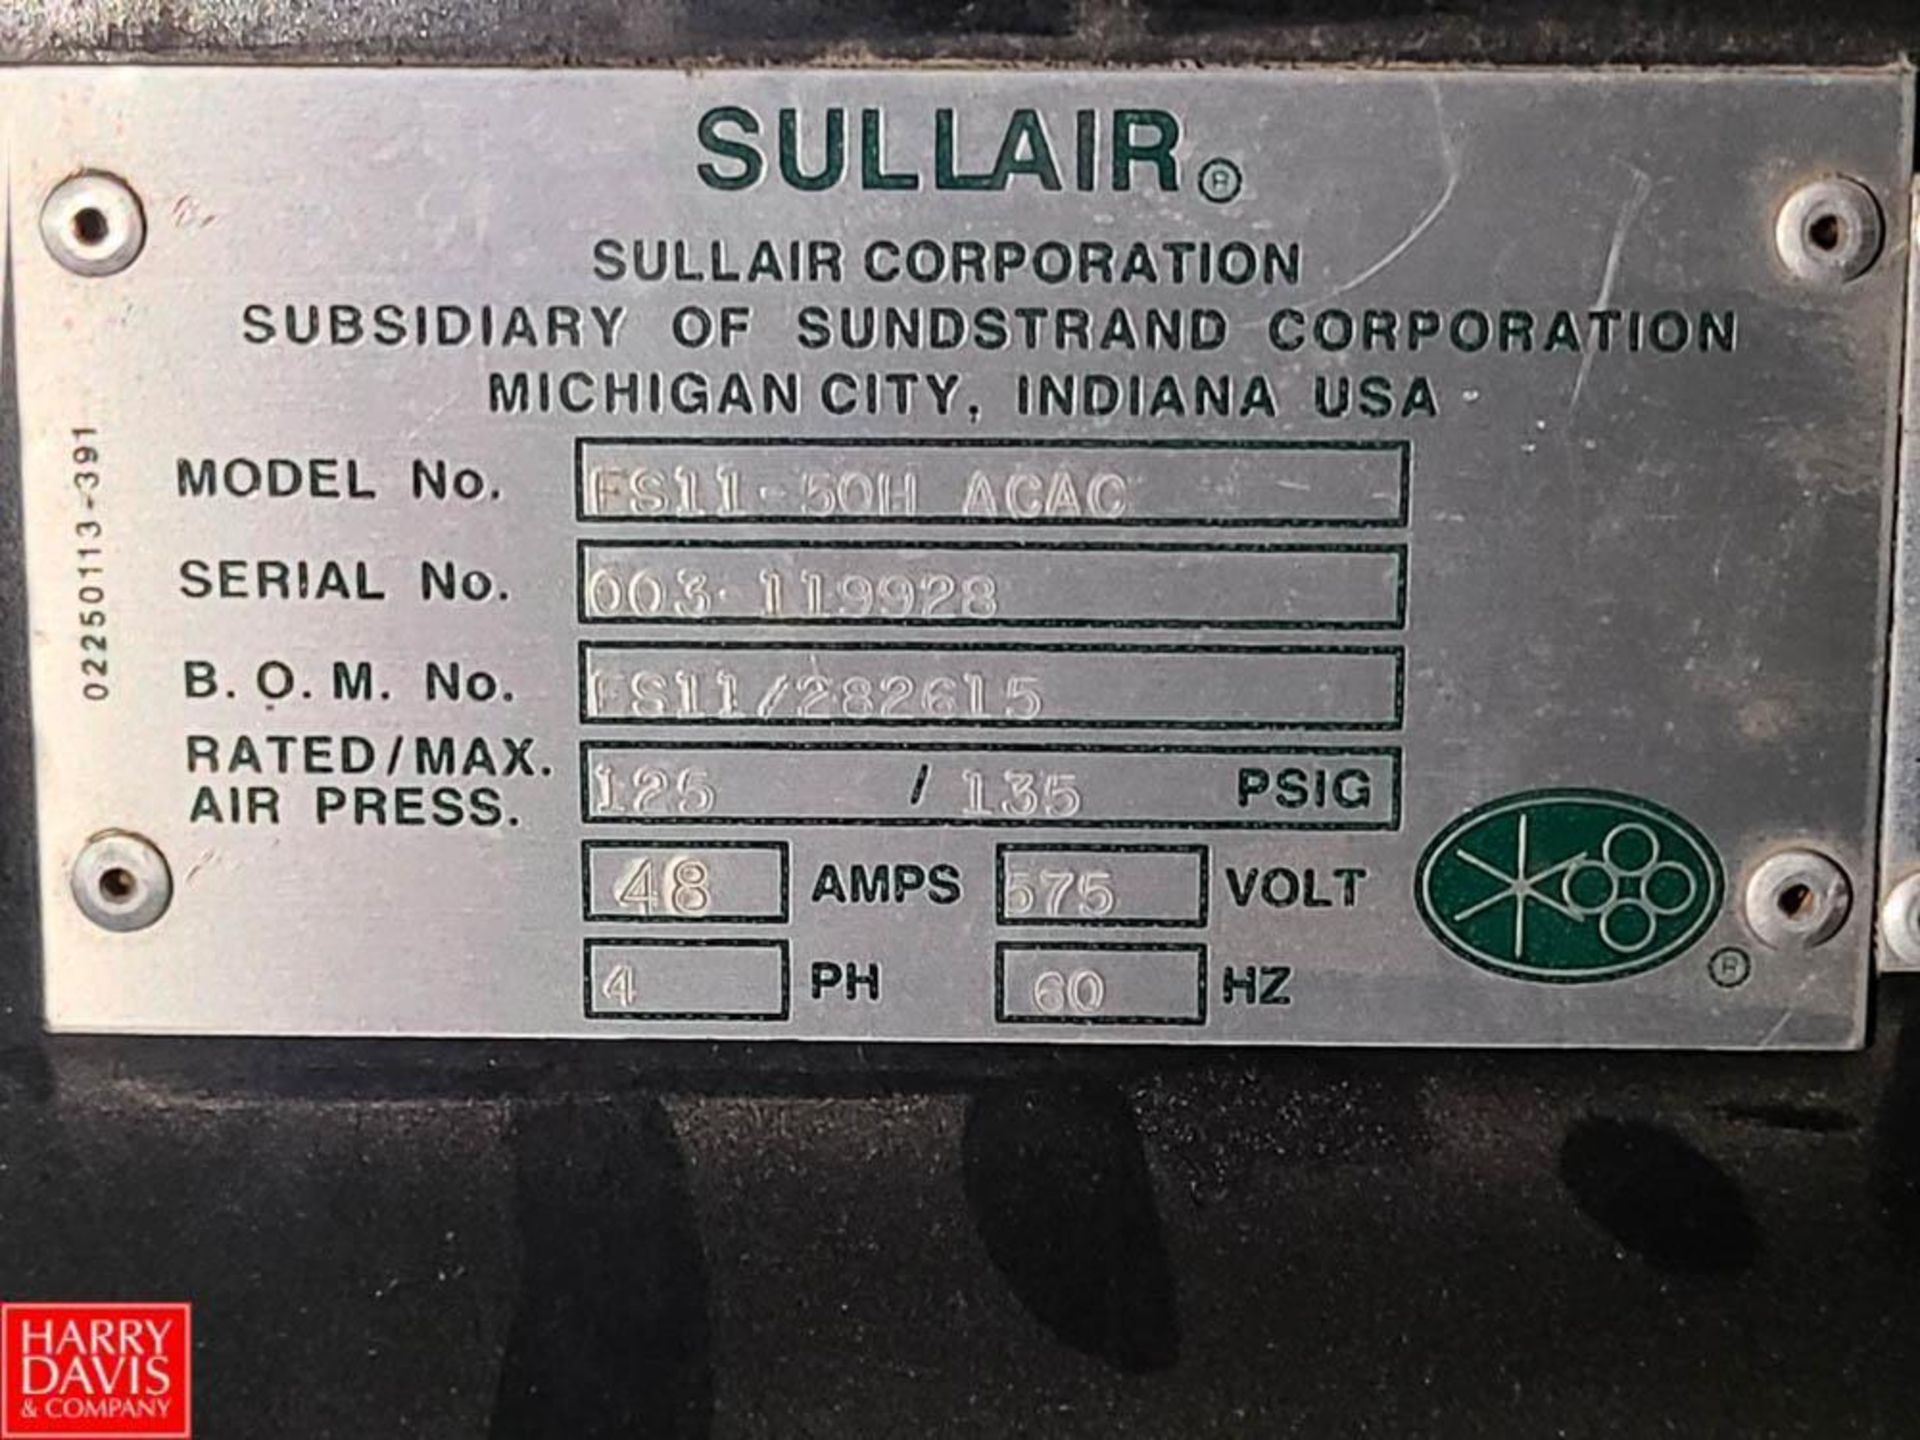 Sullair Air Compressor, Model: ES-11-50H ACAC, S/N: 003-119928 - Rigging Fee: $500 - Image 4 of 4